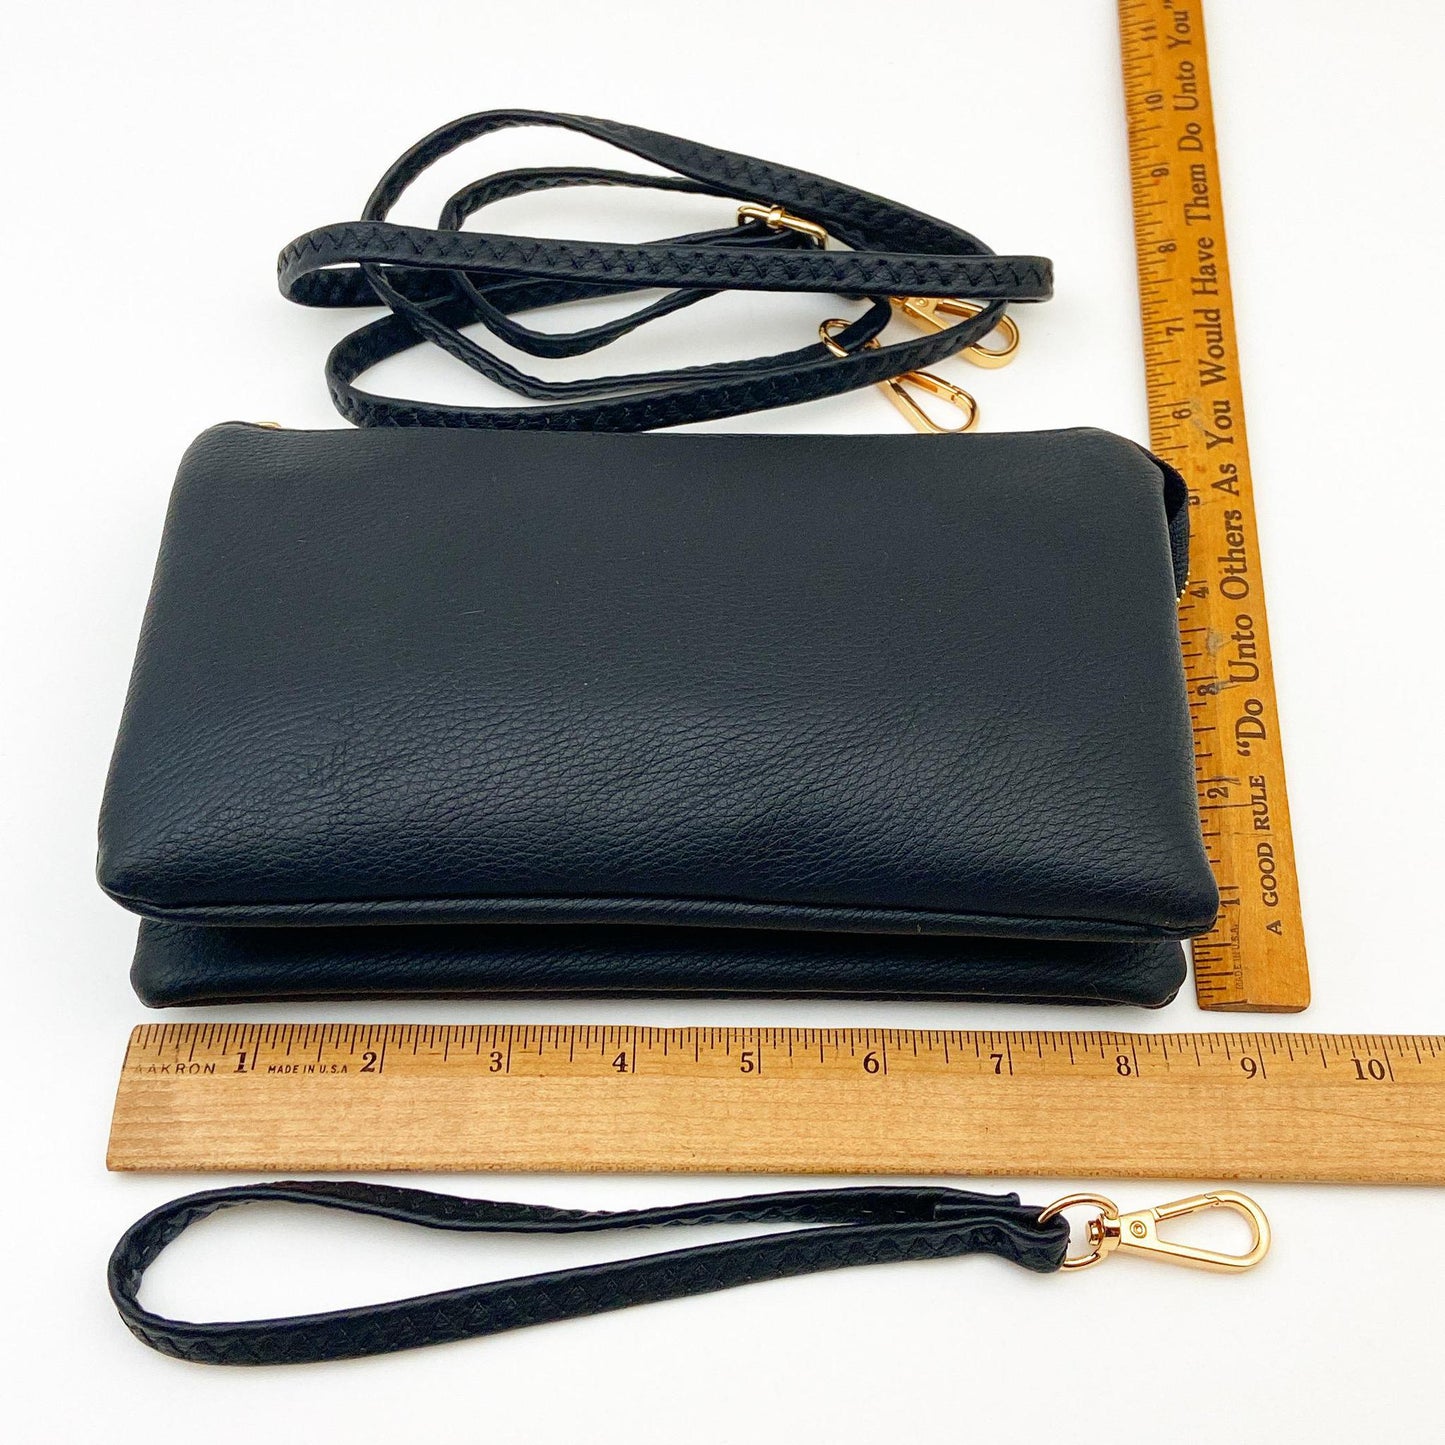 4 in 1 Handbag - Crossbody/Clutch/Wristlet - Emerald